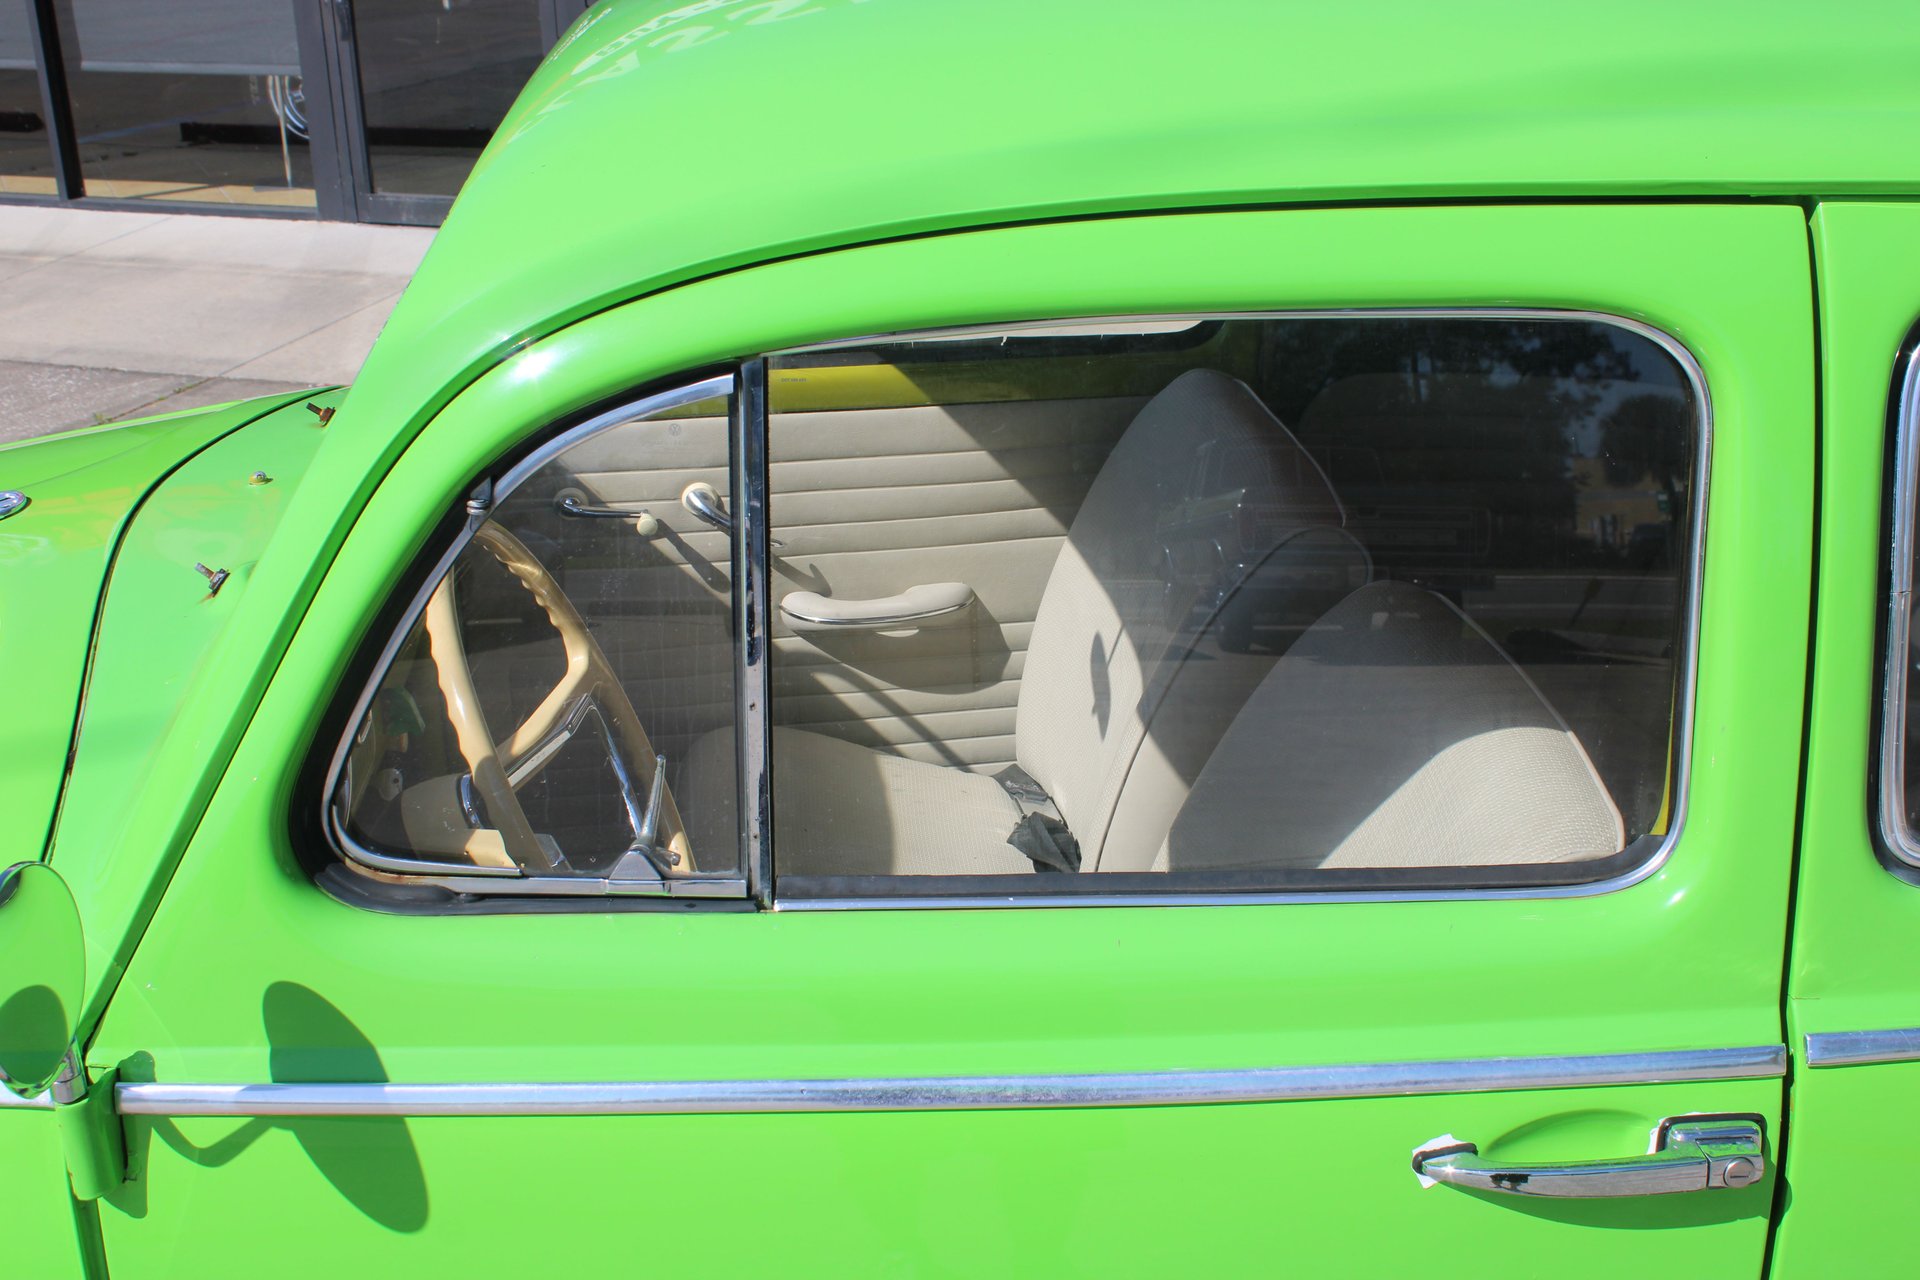 For Sale 1964 Volkswagon Beetle